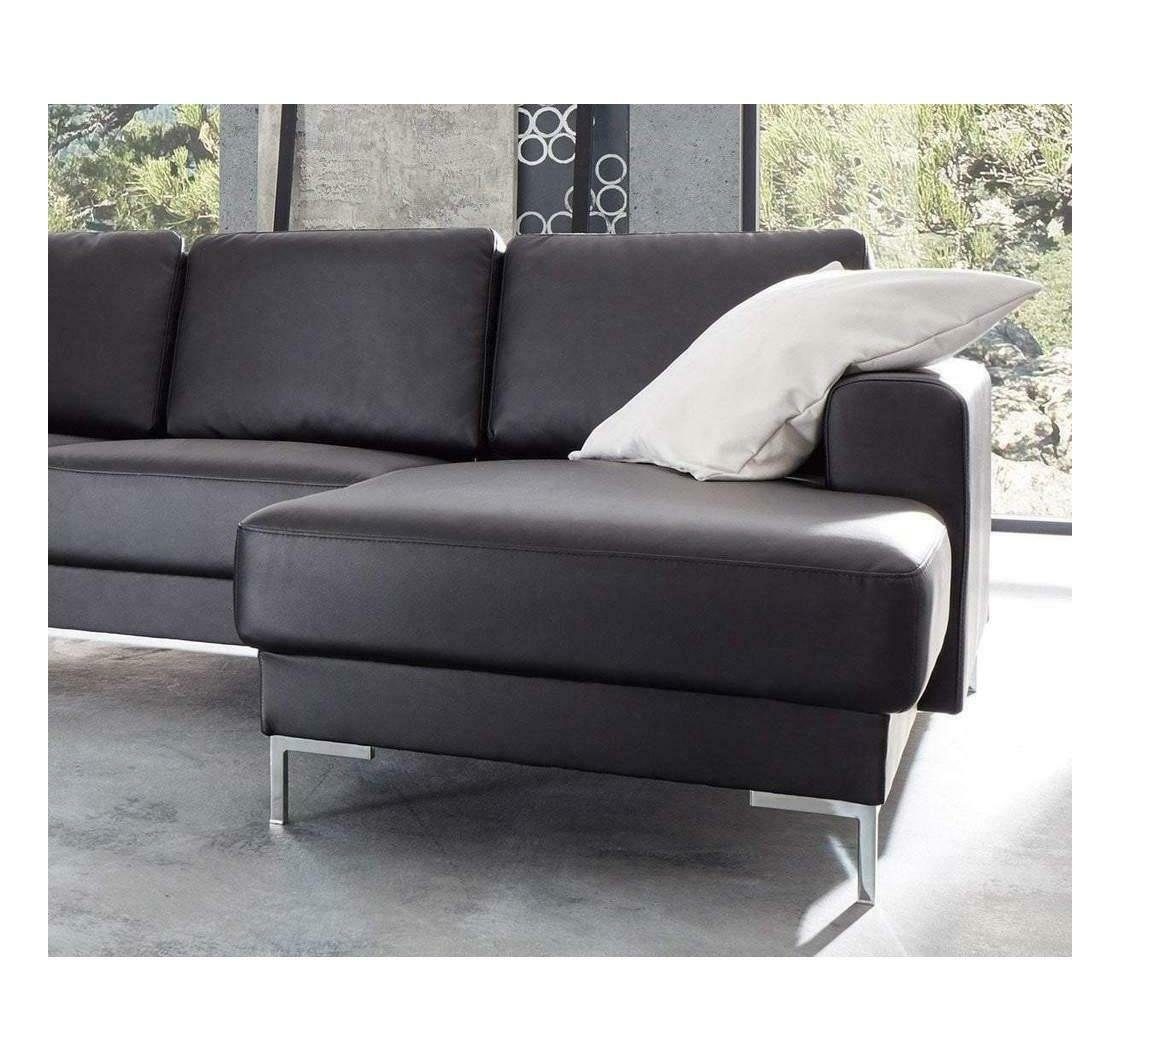 JVmoebel Sofa Luxus Wohnlandschaft schwarzes in Couch Made Europe Polstermöbel Sofa Neu, U-Form